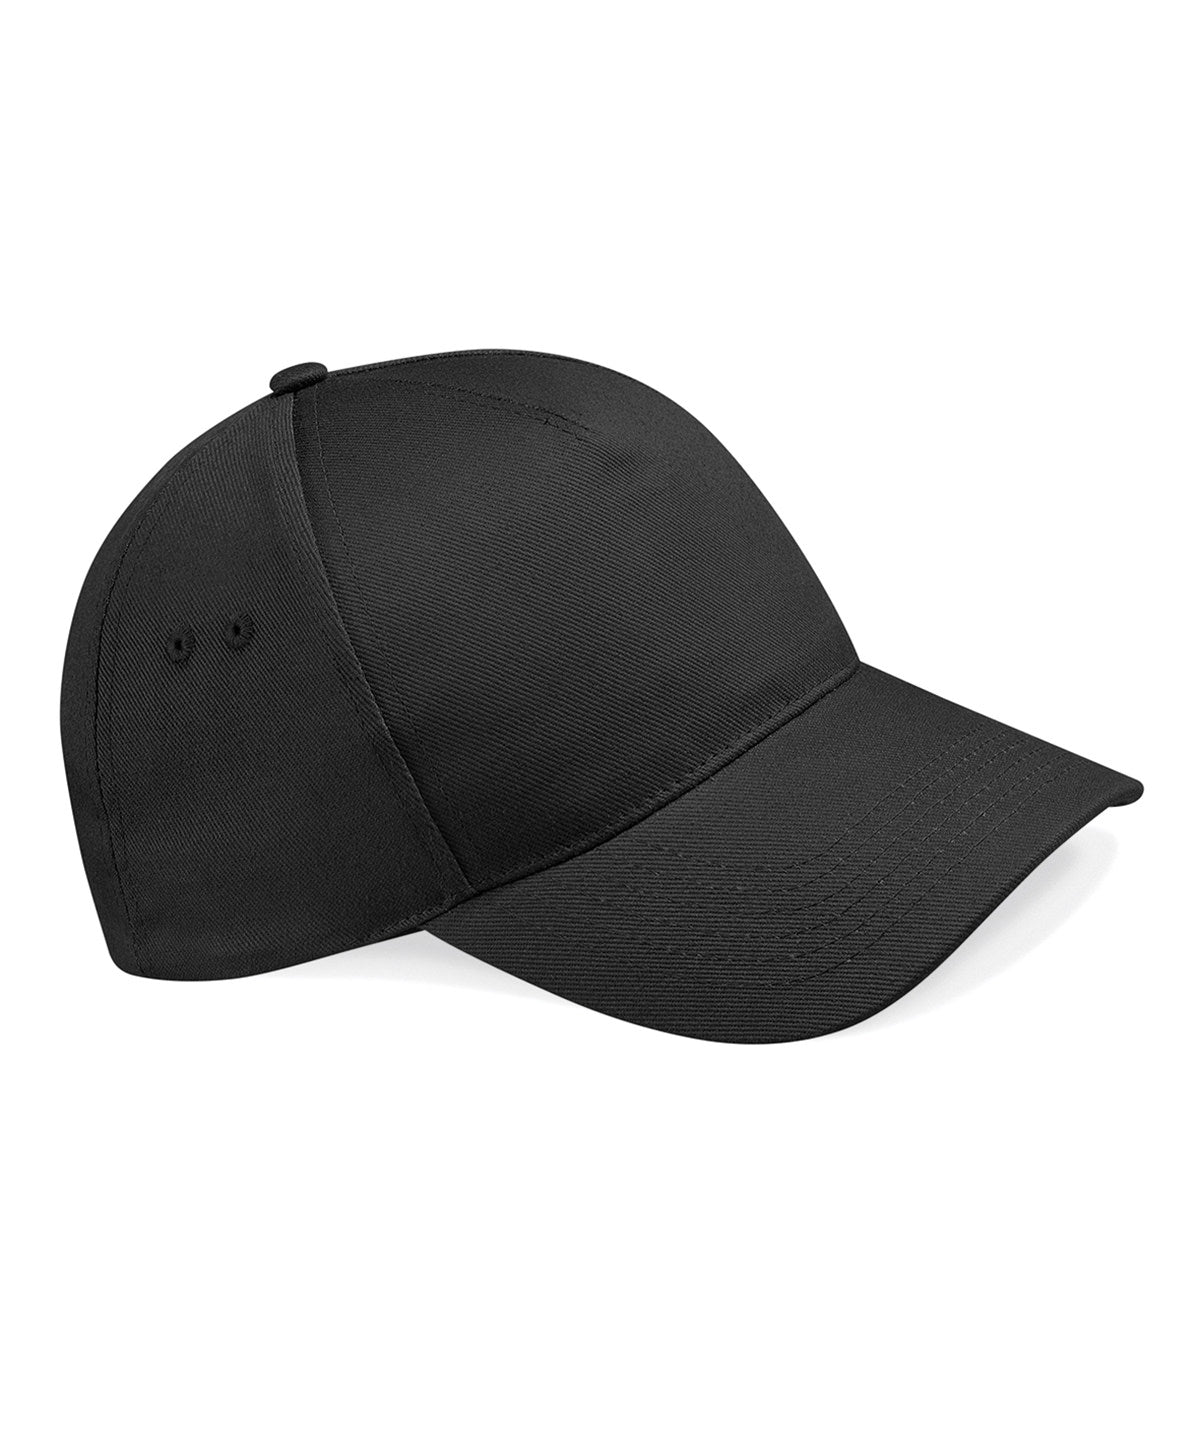 Personalised Caps - Black Beechfield Ultimate 5-panel cap